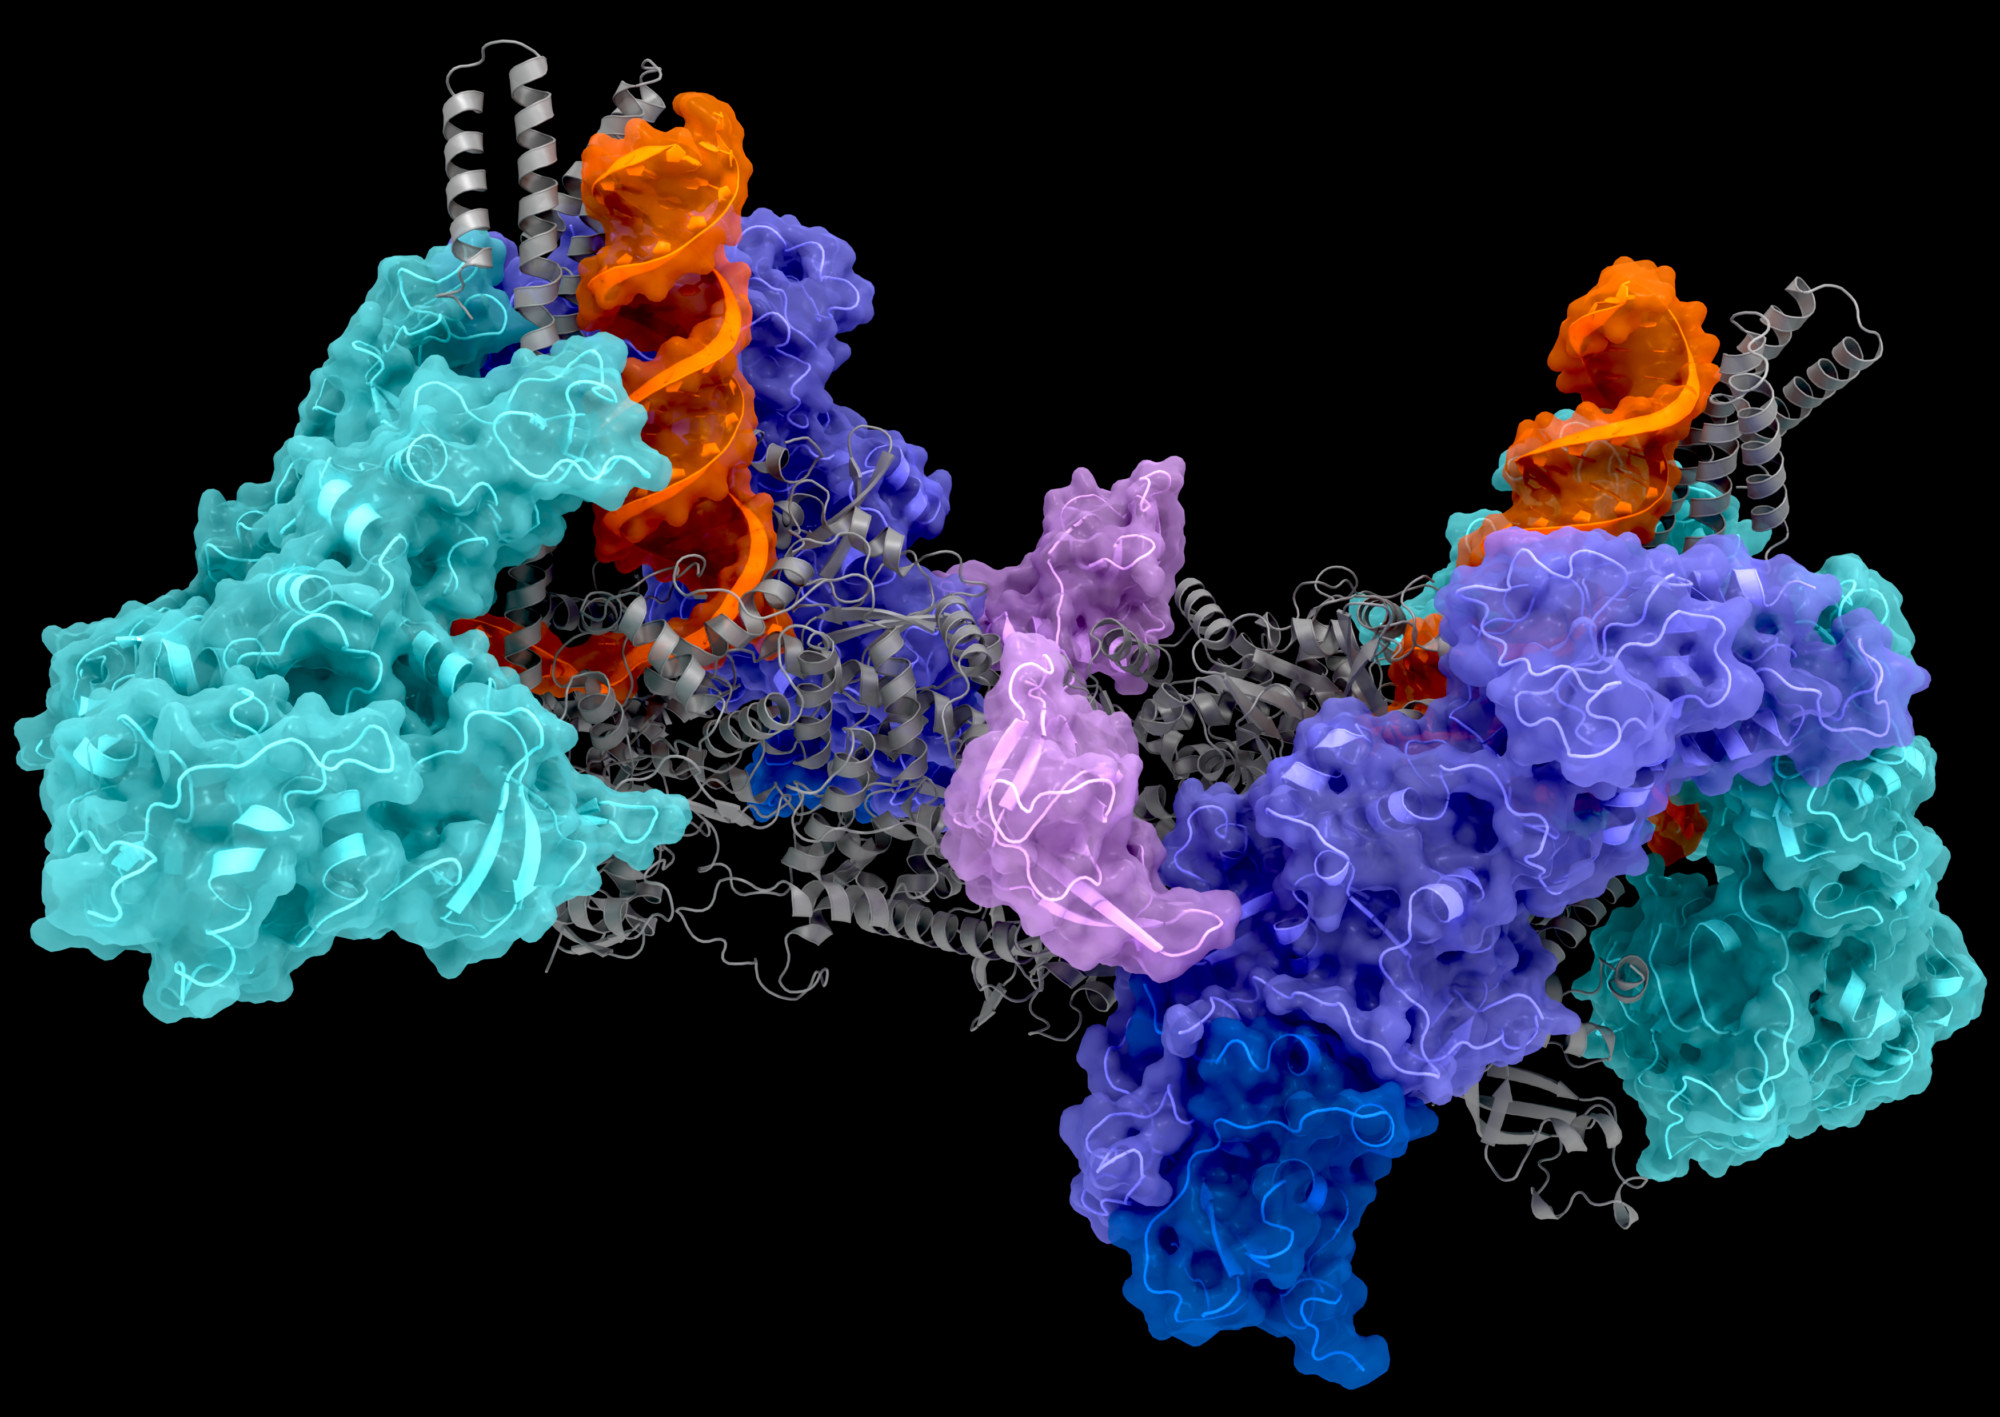 3D Protein Imaging header image representing a 3D molecular complex